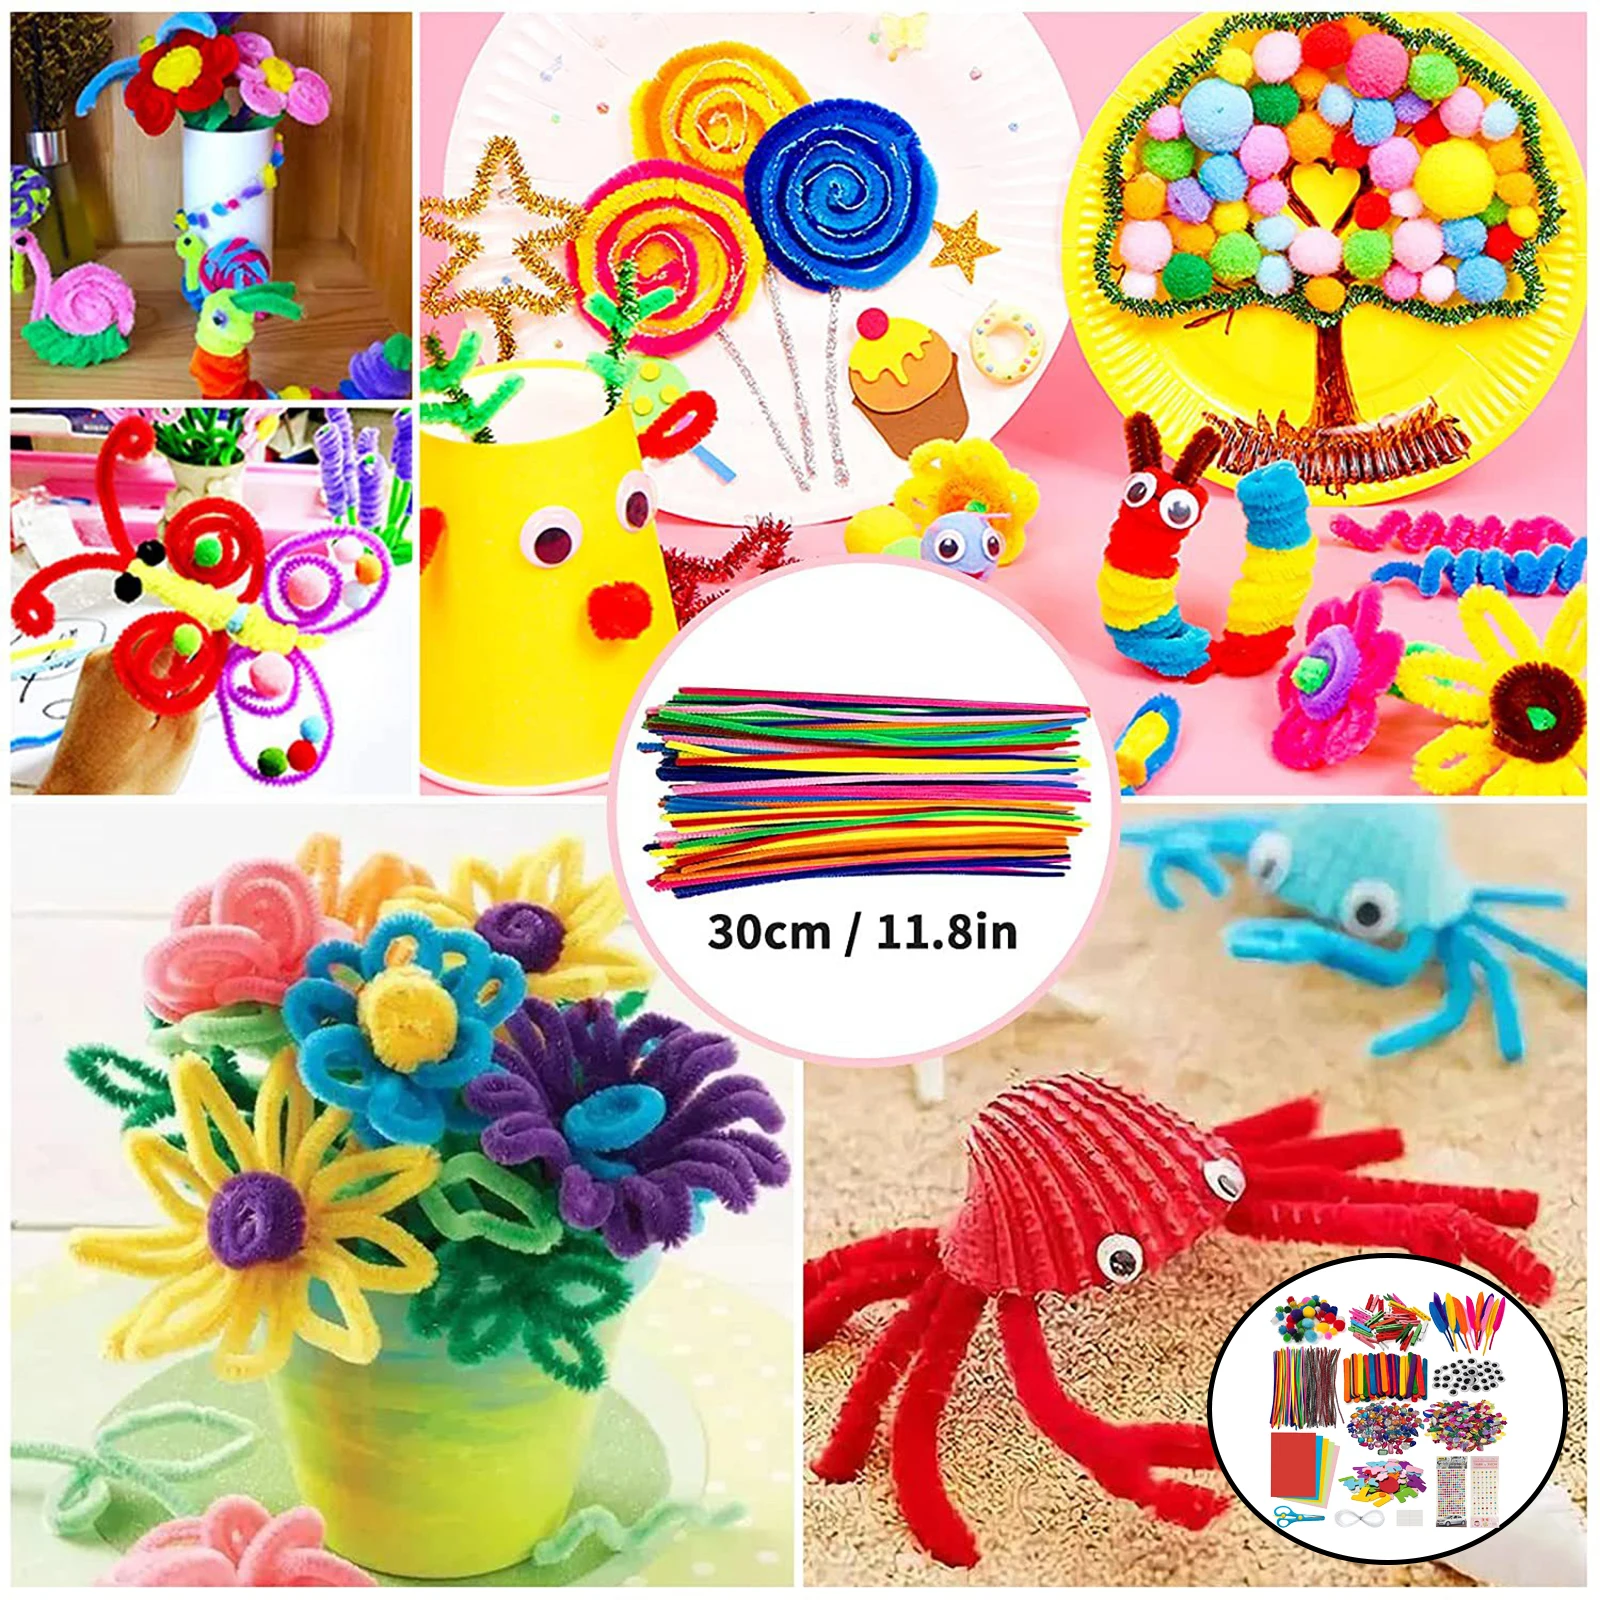 1200 Pieces Plush Balls Eyes DIY Art Craft Toys Plush Stick Pom Poms Rainbow Colors Educational Creativity for Kid